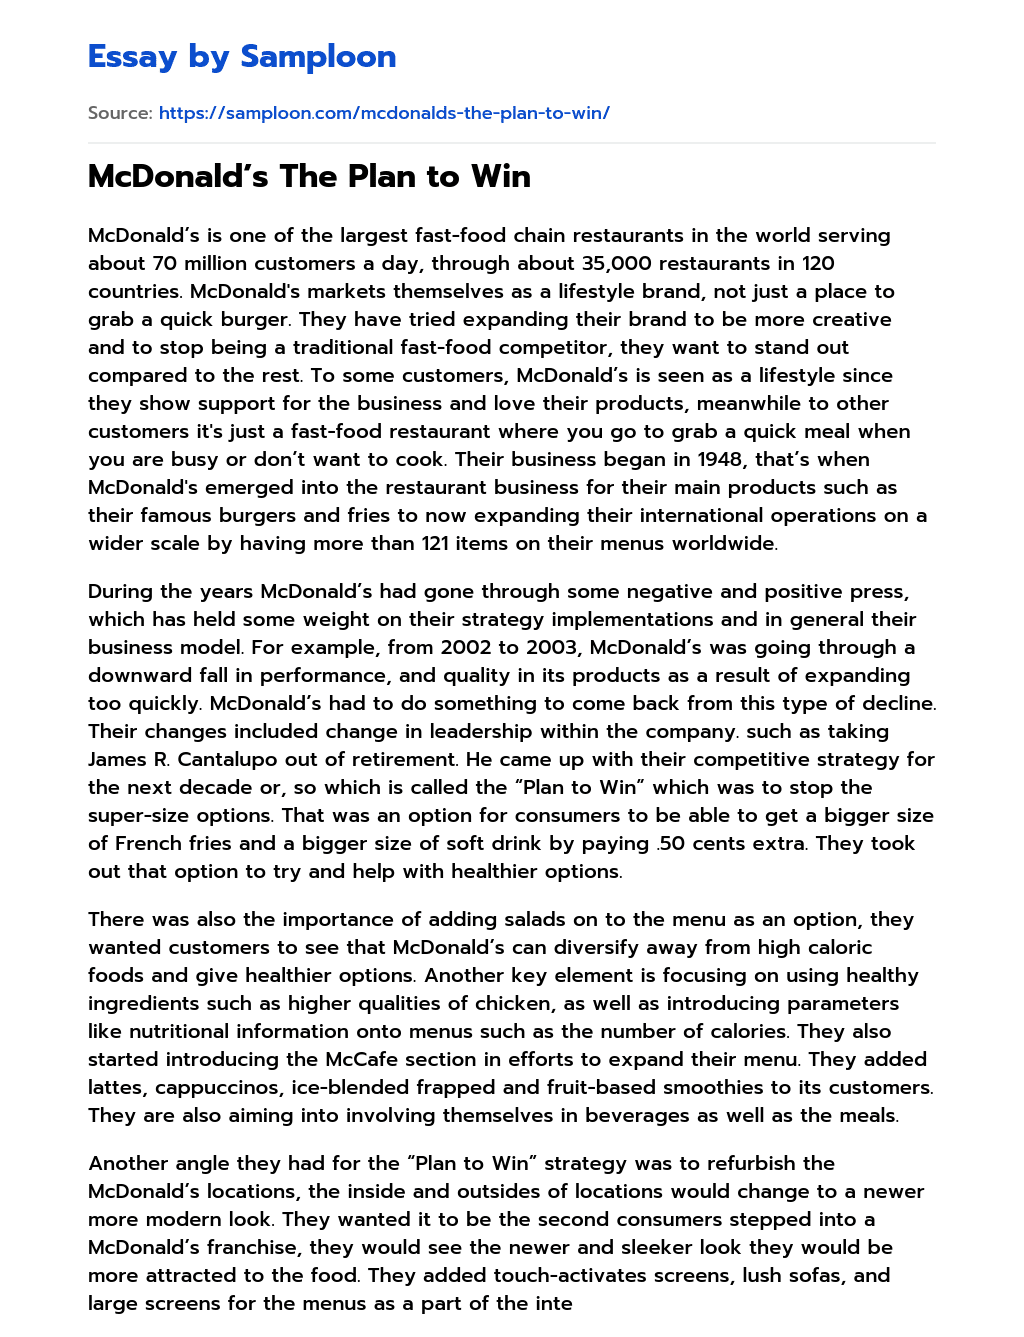 McDonald’s The Plan to Win essay